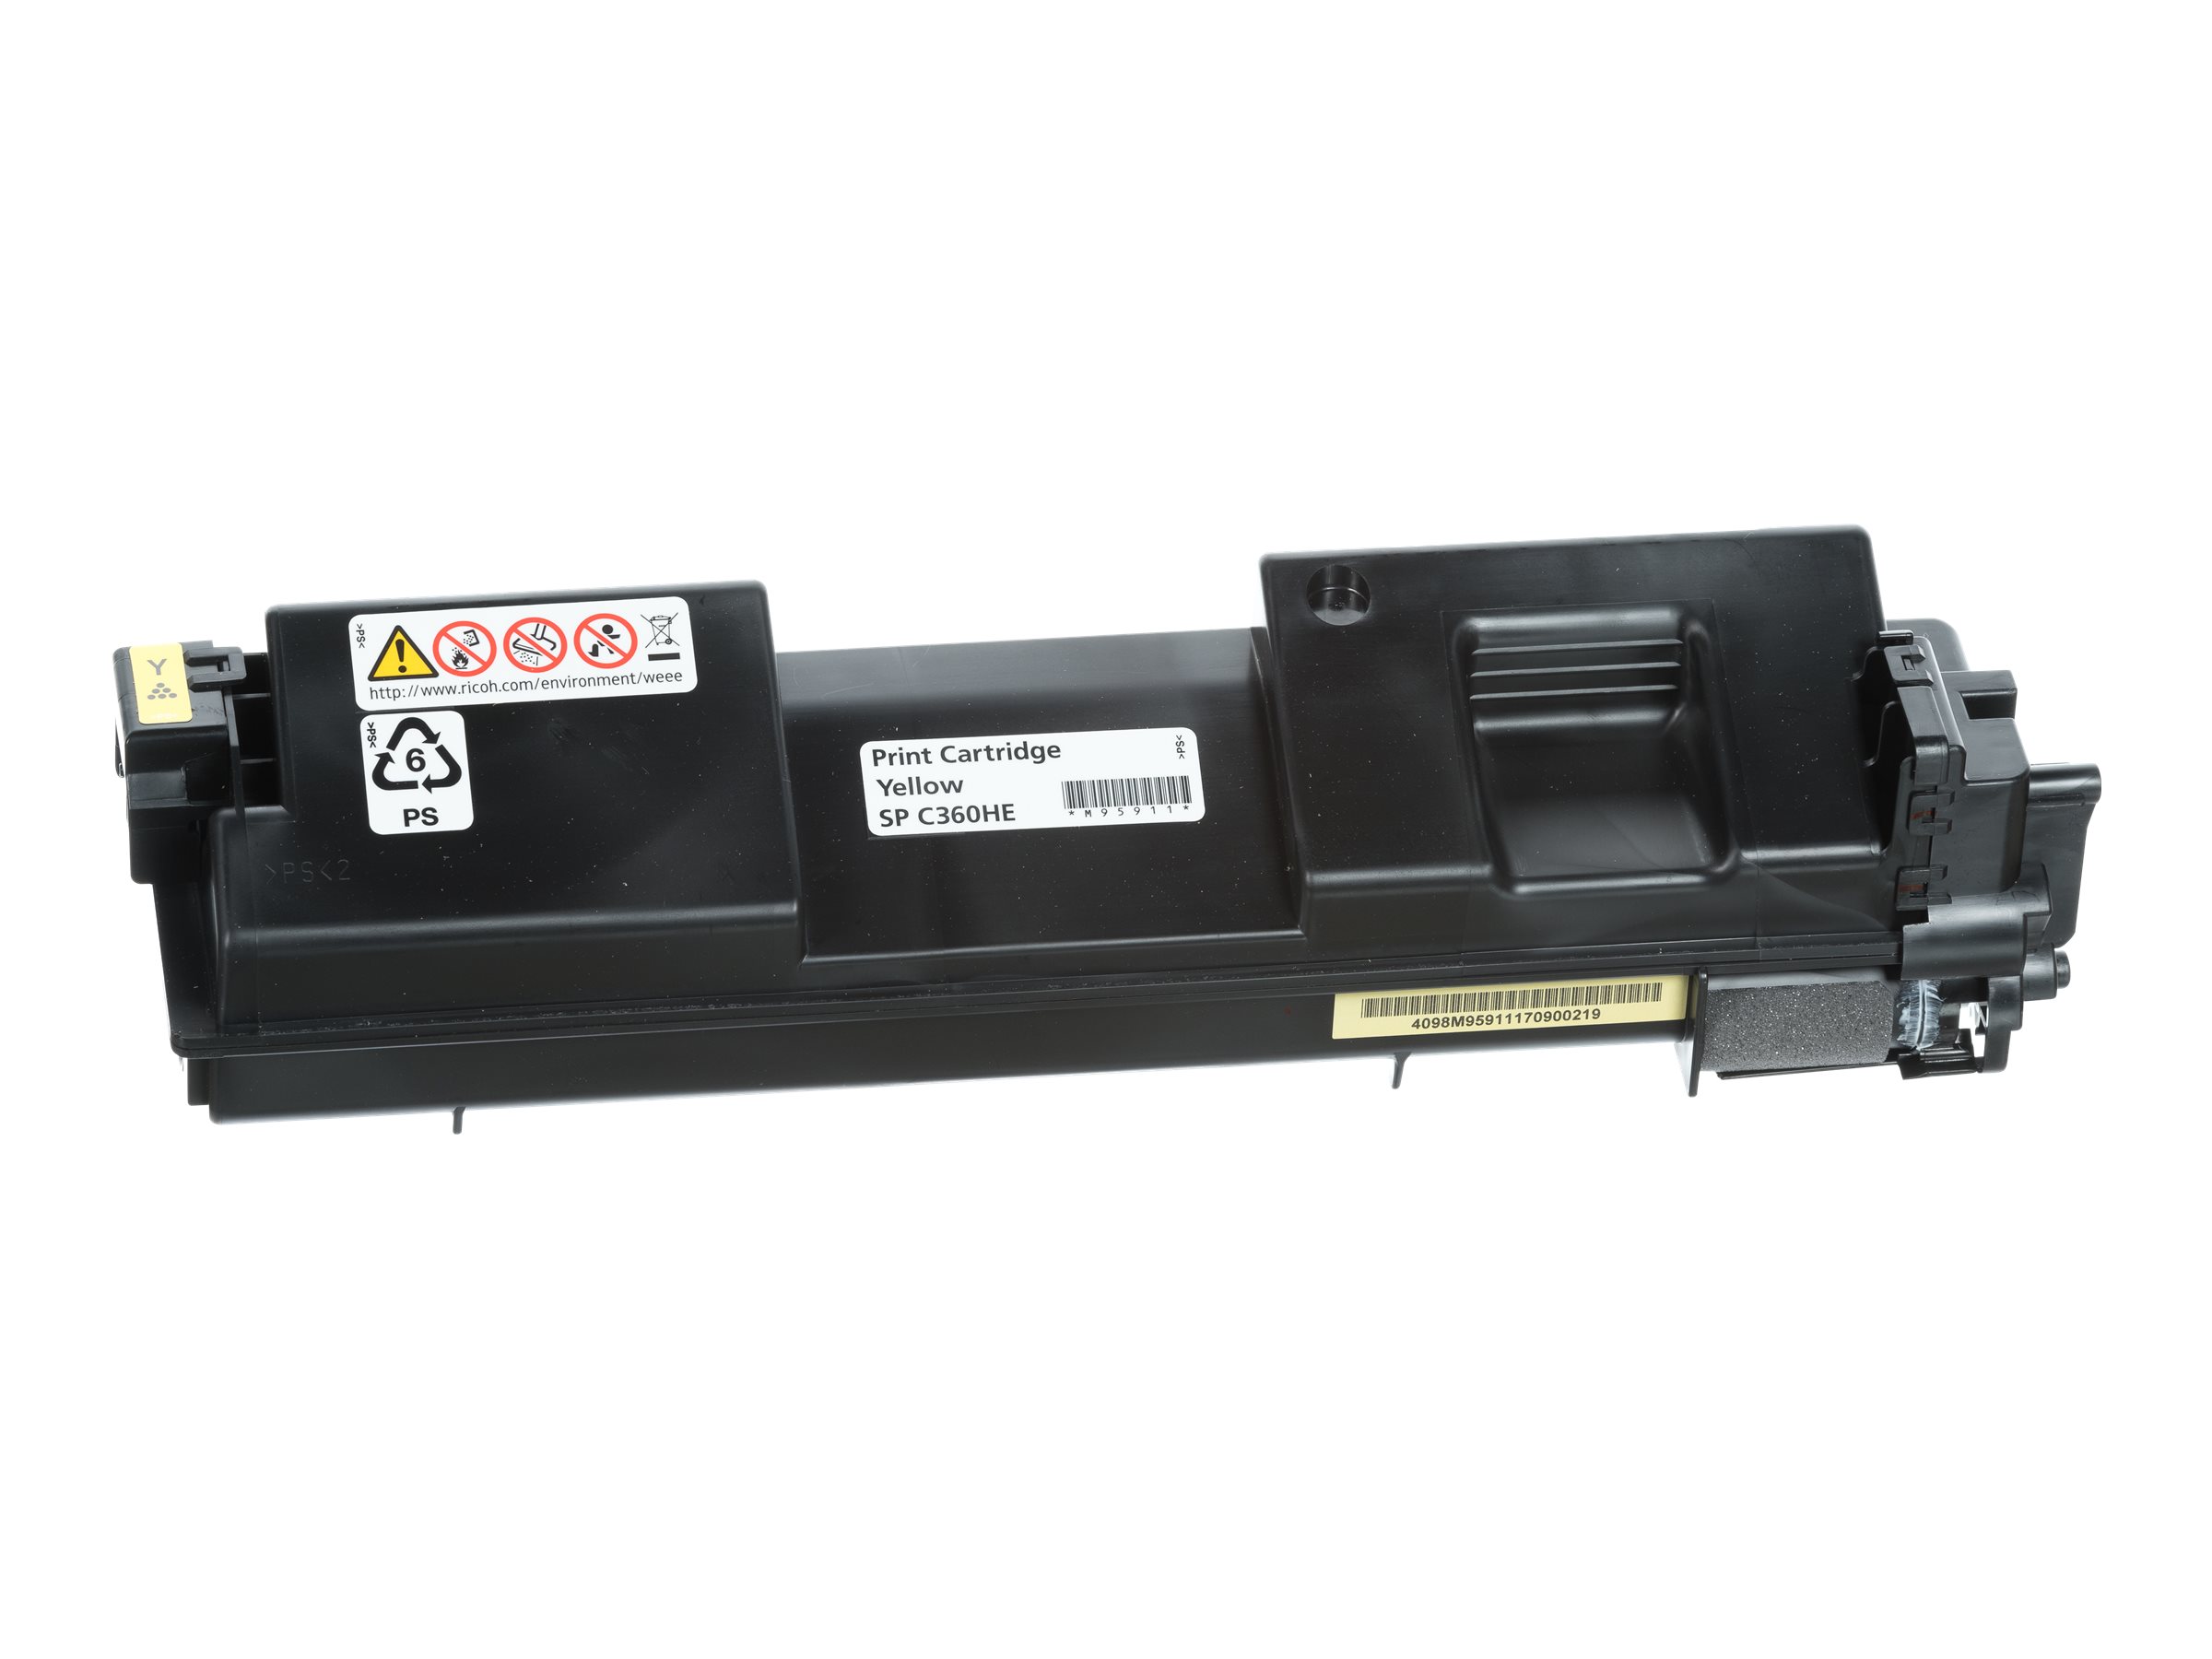 Ricoh Print Cartridge Yellow SP C360HE (408187)